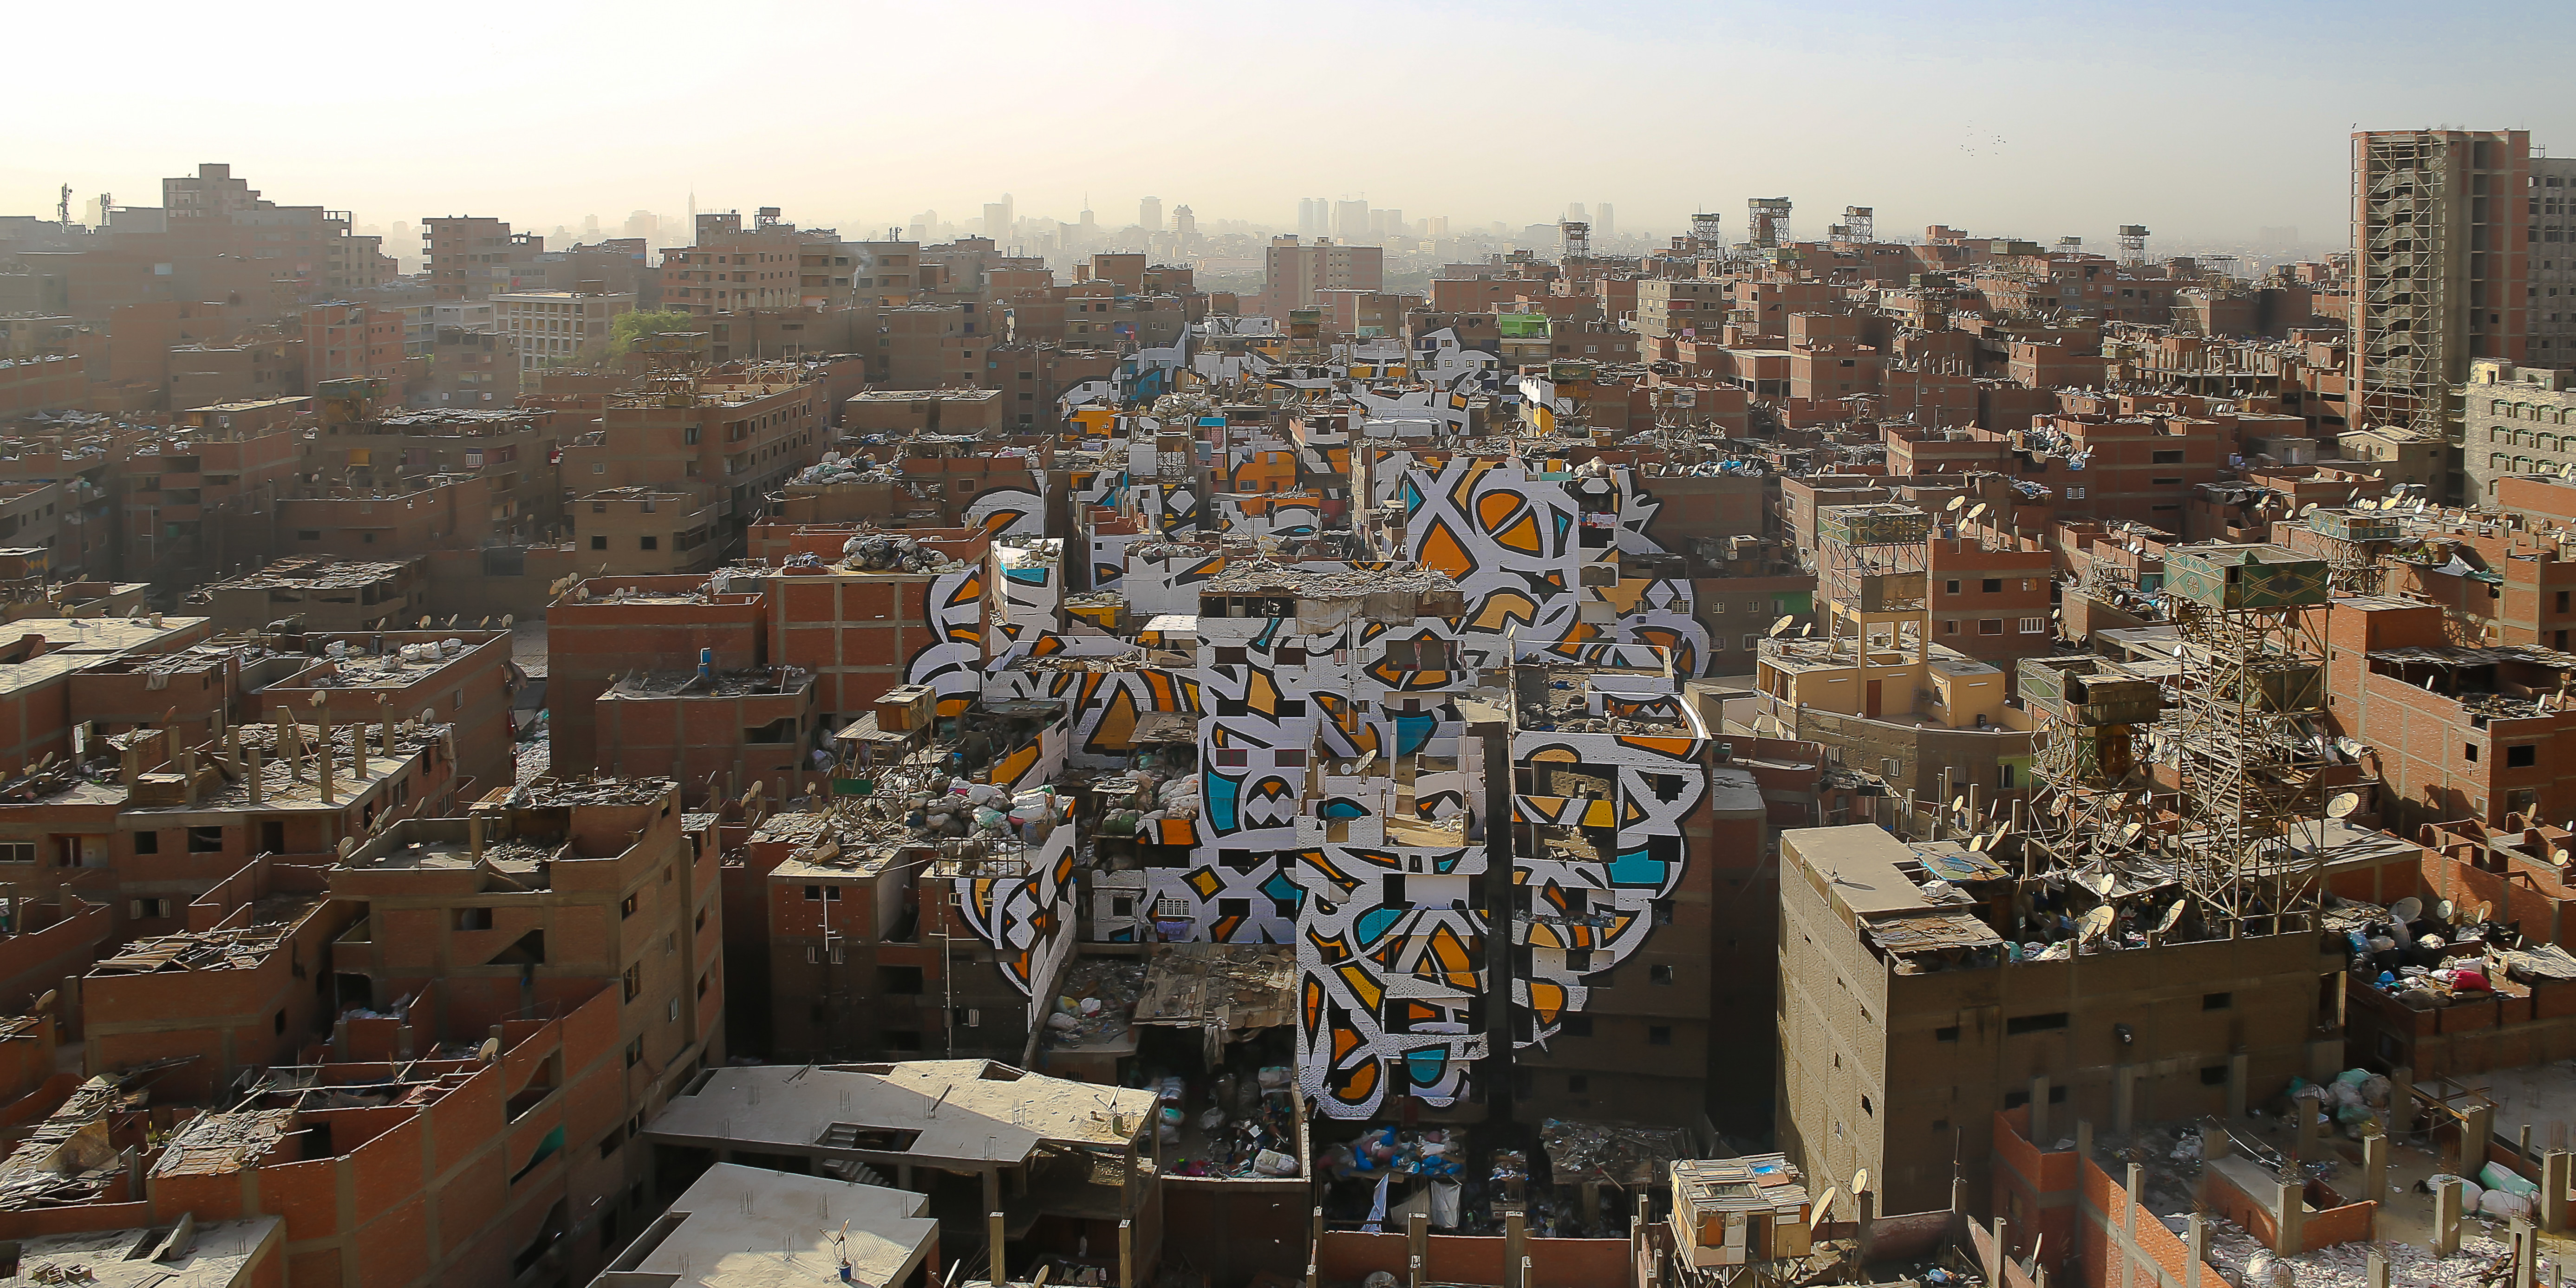 el Seed's Perception mural (detail). Photo: Ouahid Berrehouma/Mahdi Khmili.